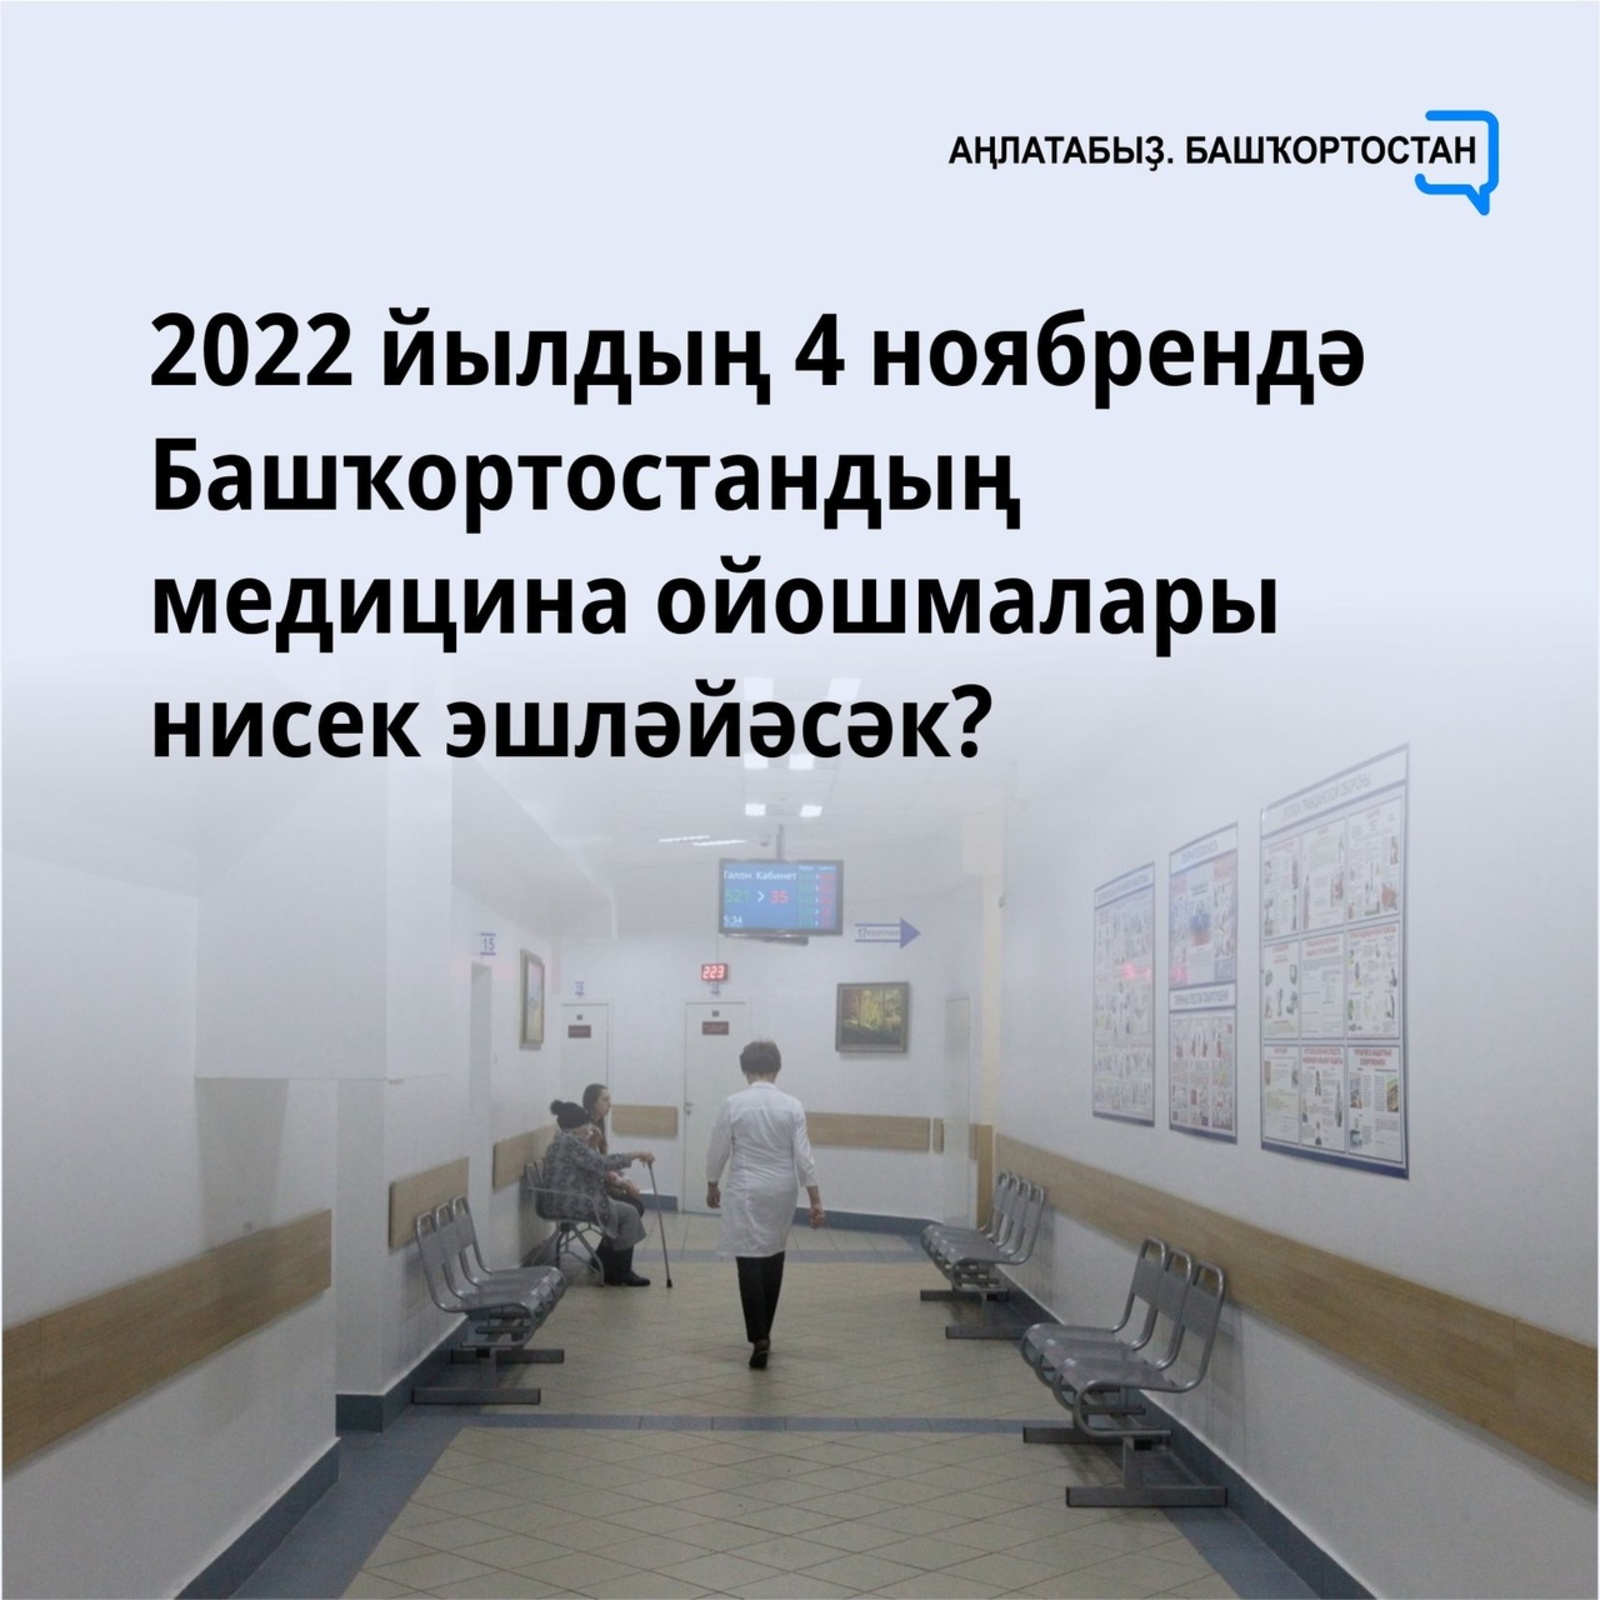 2022 йылдың 4 ноябрендә Башҡортостандың медицина ойошмалары нисек эшләйәсәк?